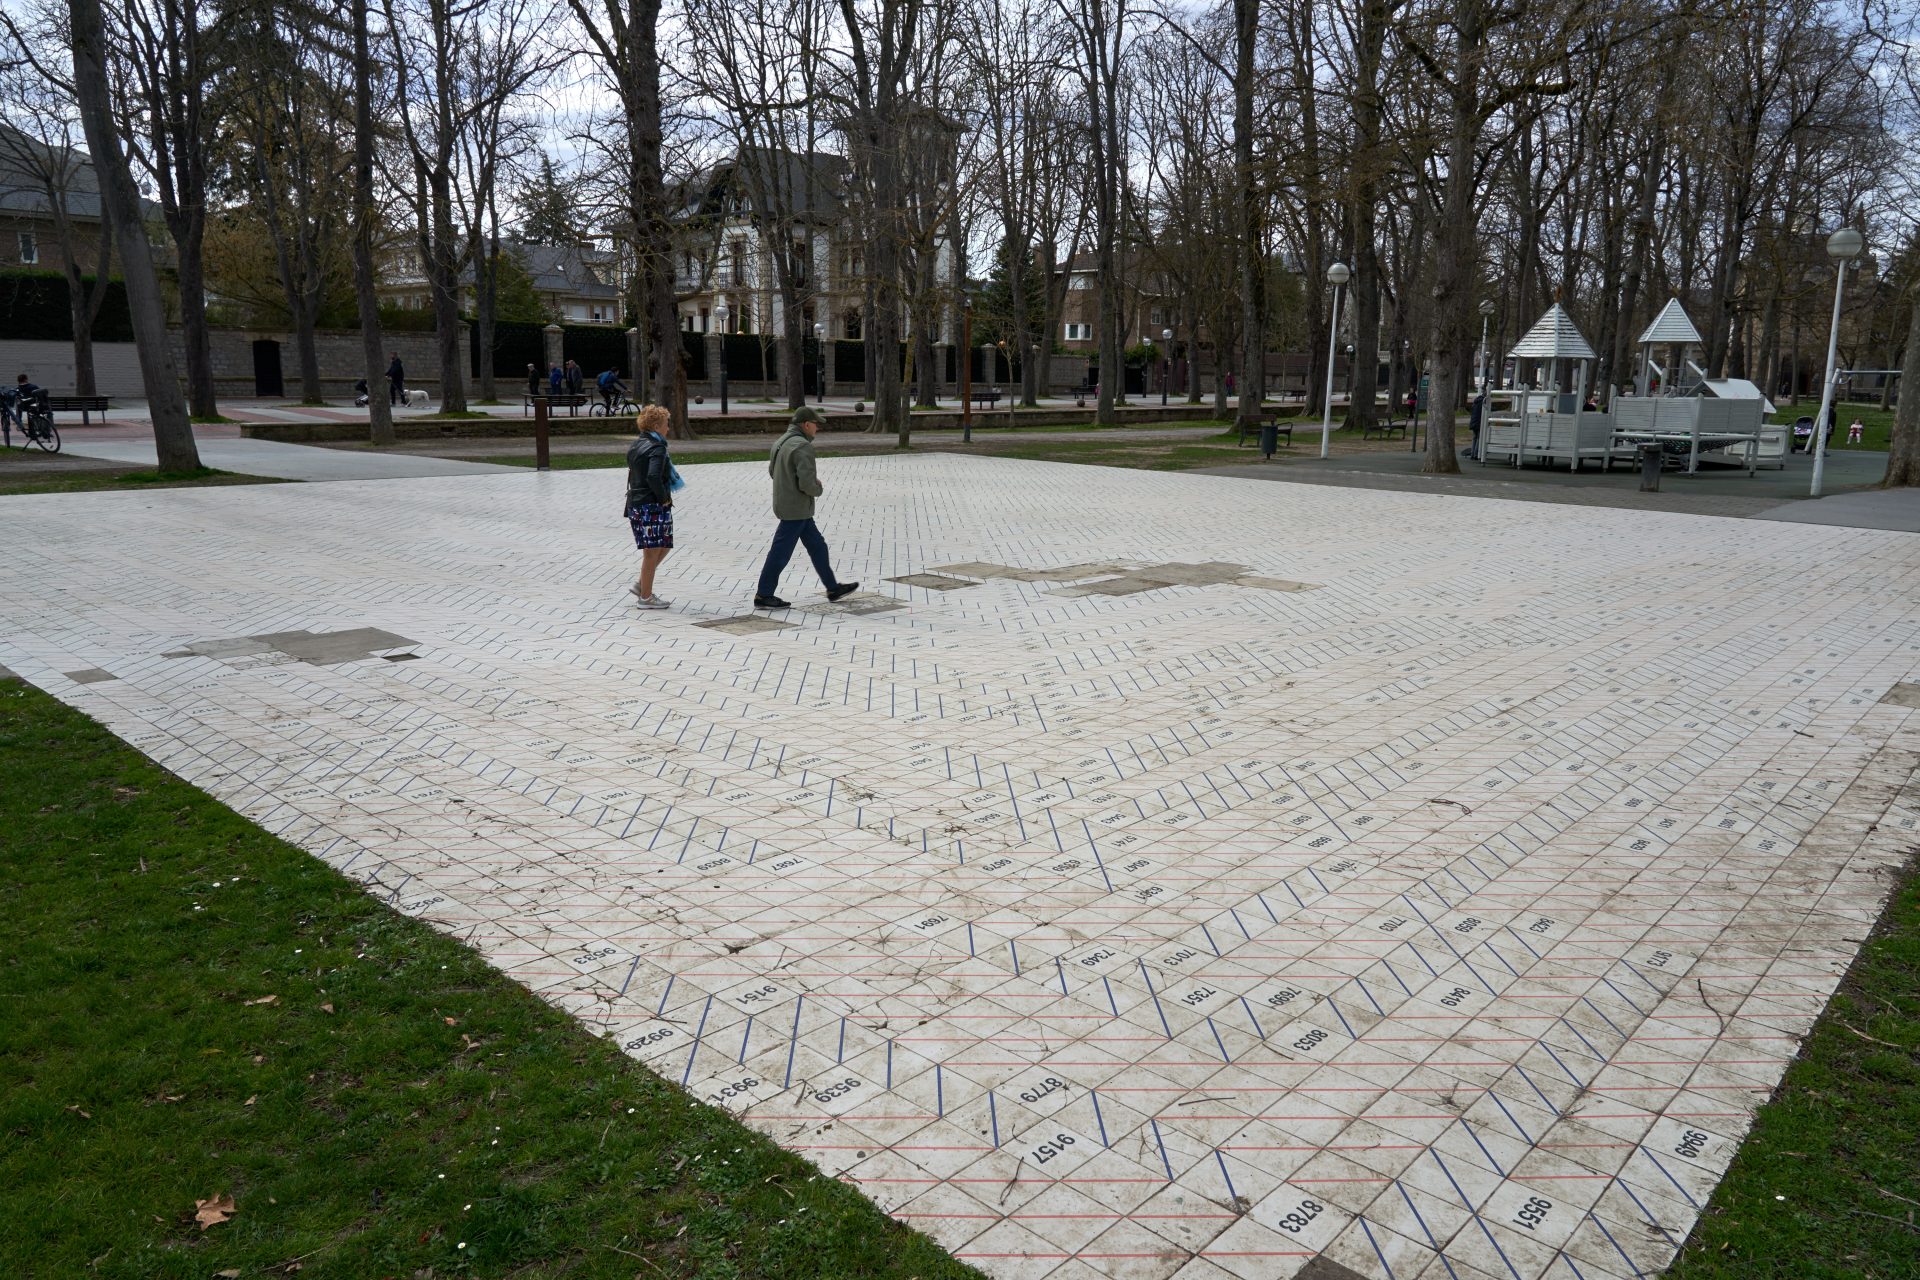 Mosaico de suelo de Esther Ferrer que será trasladado al Artium. EFE/Lino Rico